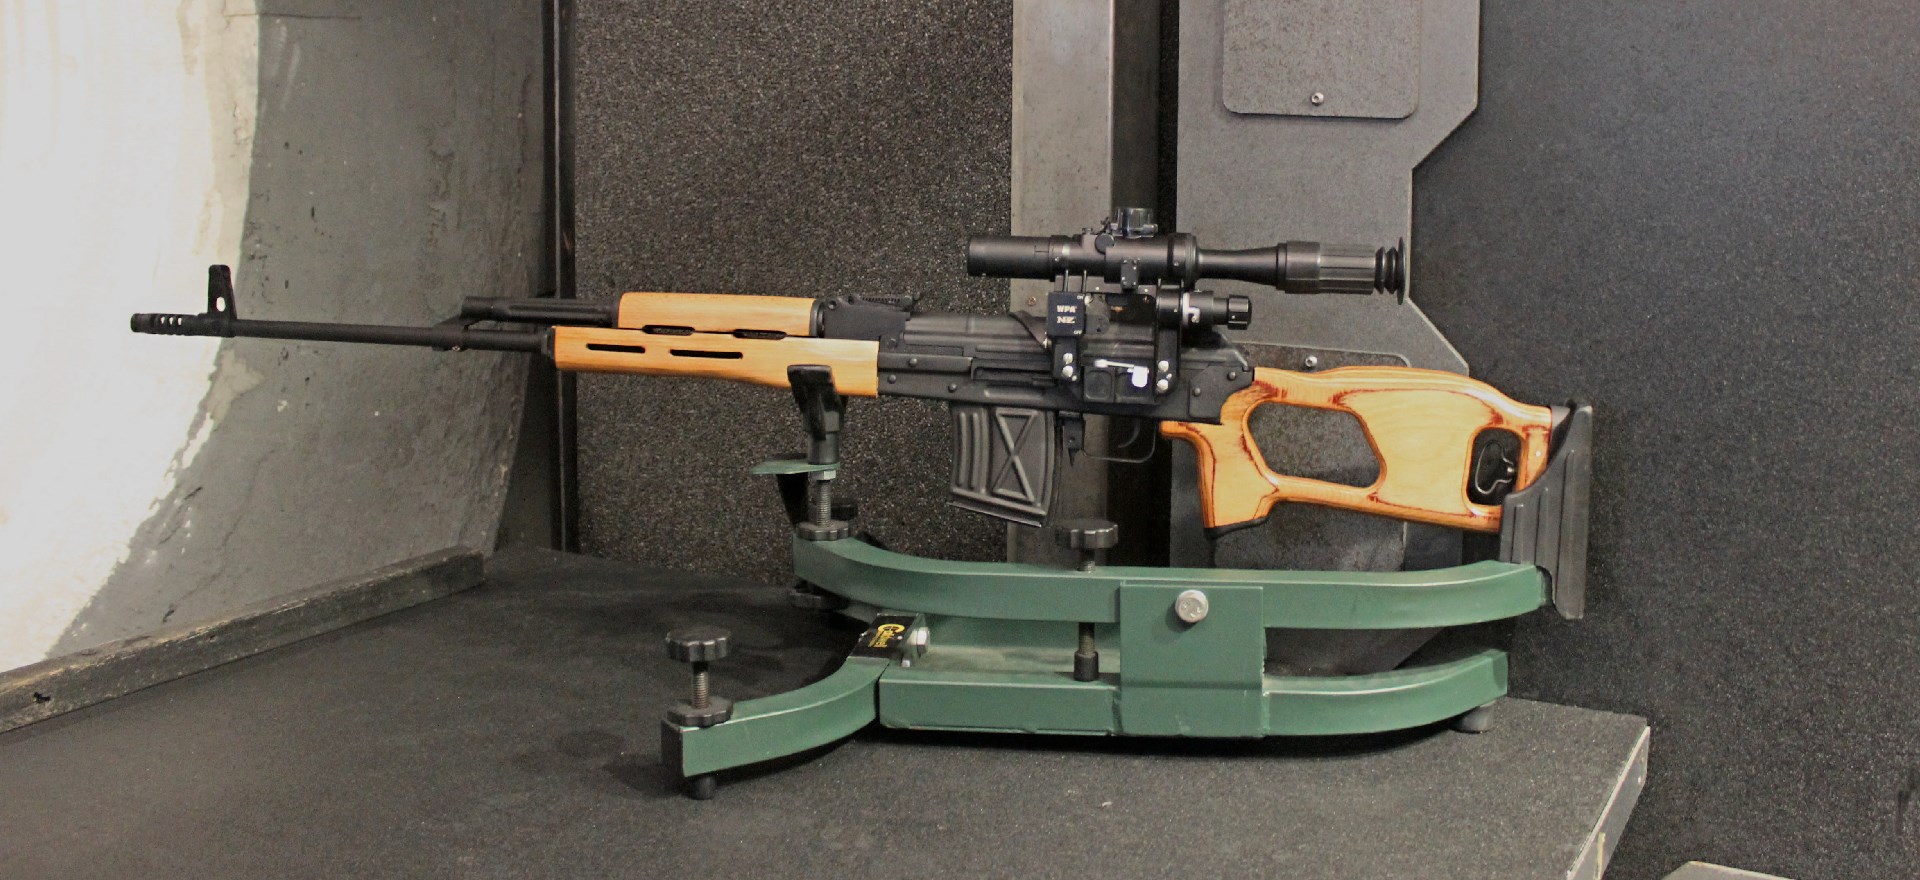 Century Arms PSL 54 in metal cradle on shooting range